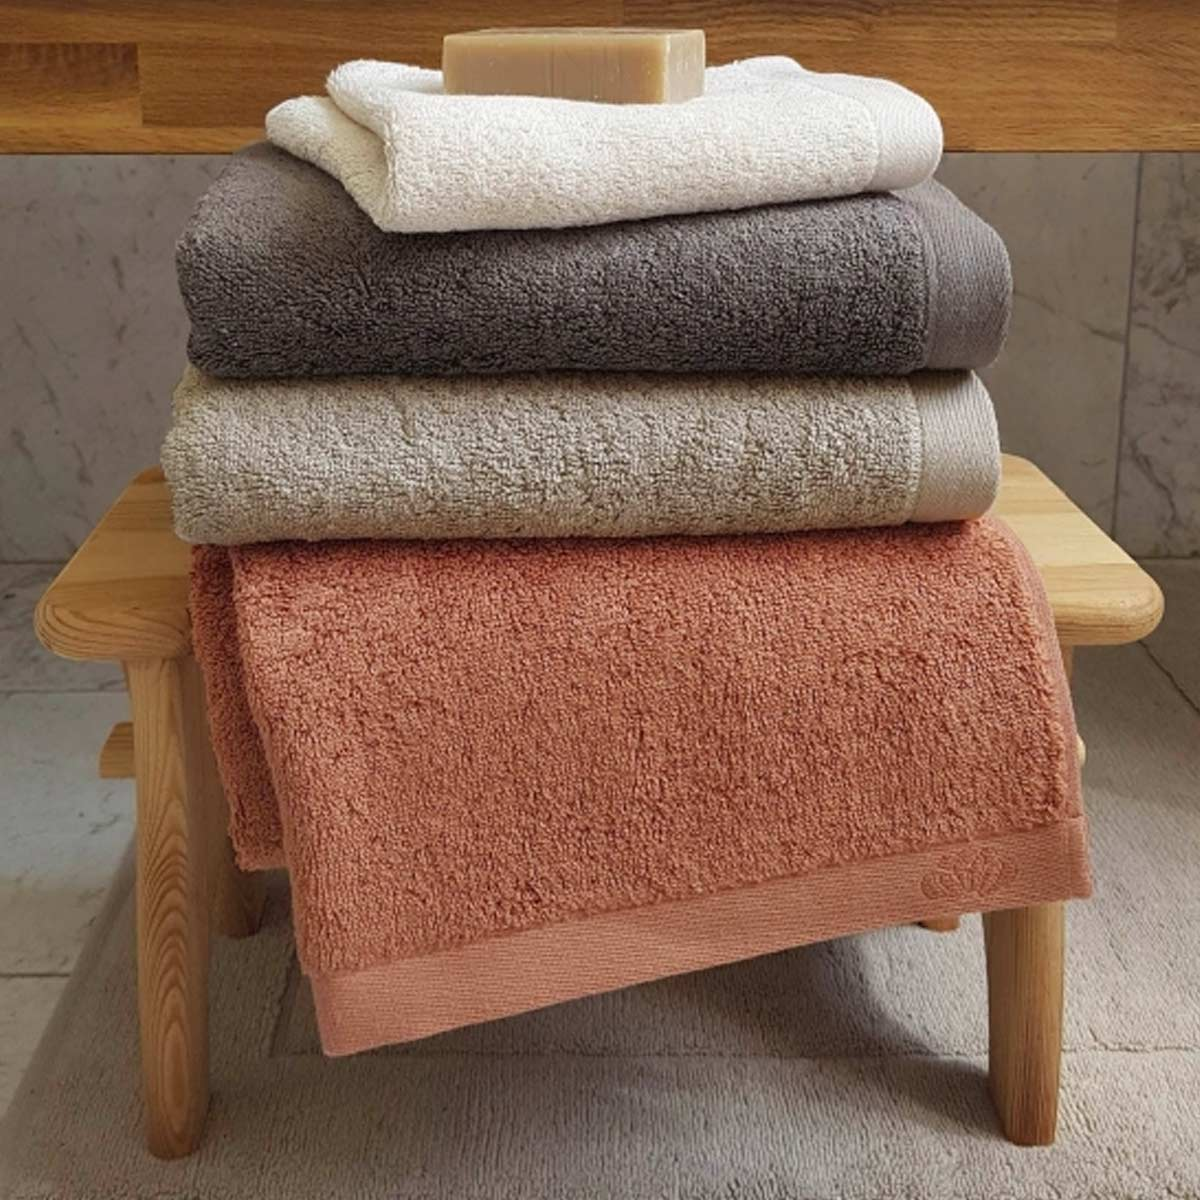 Asciugamani 50 x 100 cm, 100% cotone di lusso, set di 4 asciugamani in  spugna, beige - Così la tua casa diventa un'oasi di benessere